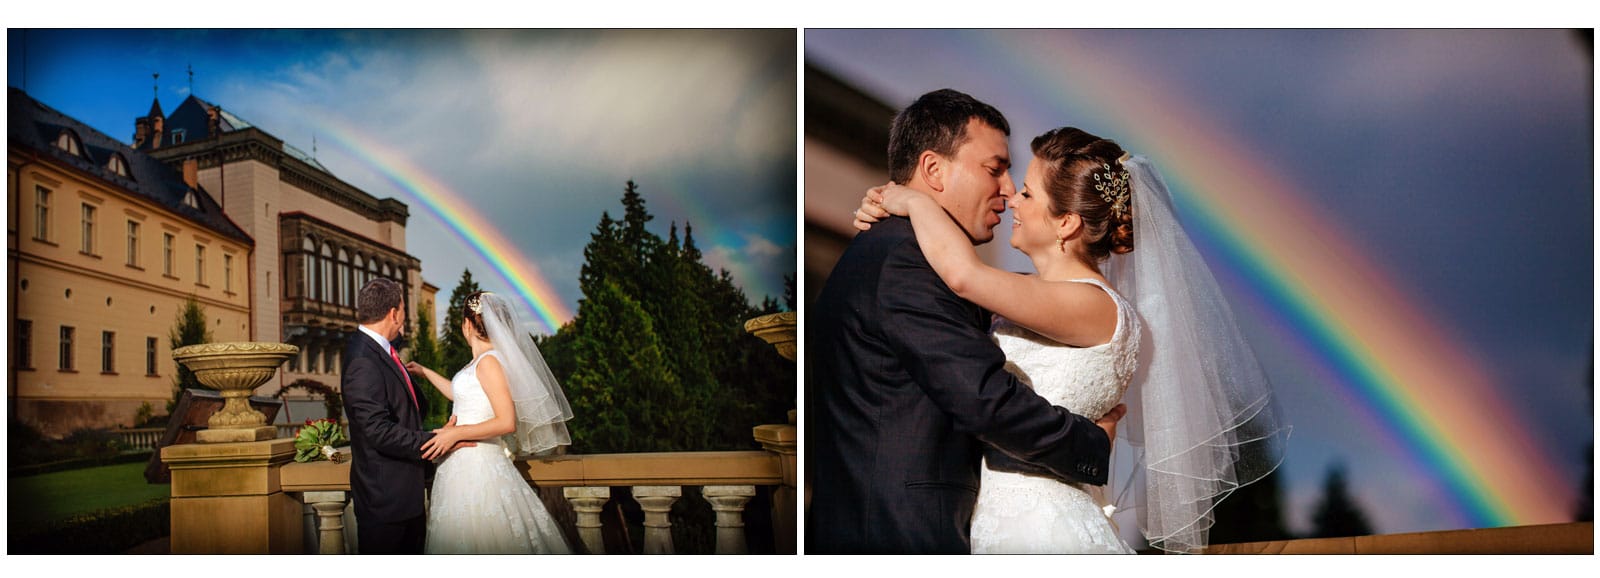 Castle Zbiroh Wedding / Paola & Alexei / wedding portraits (rainbows)